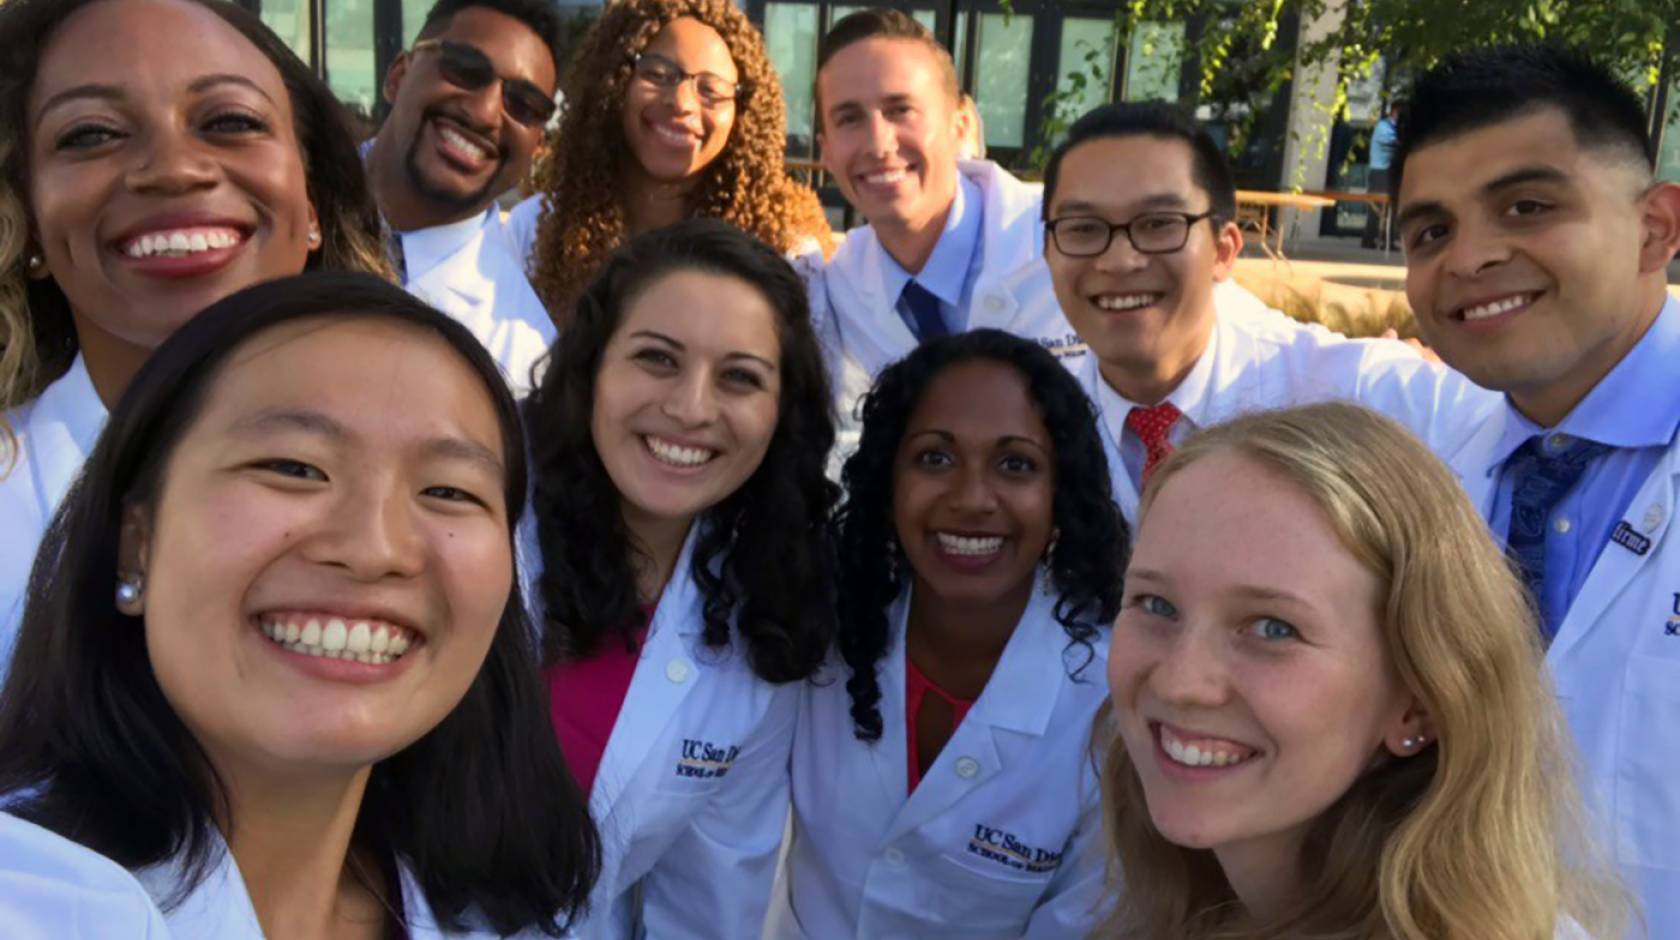 Group selfie of doctors in white coats